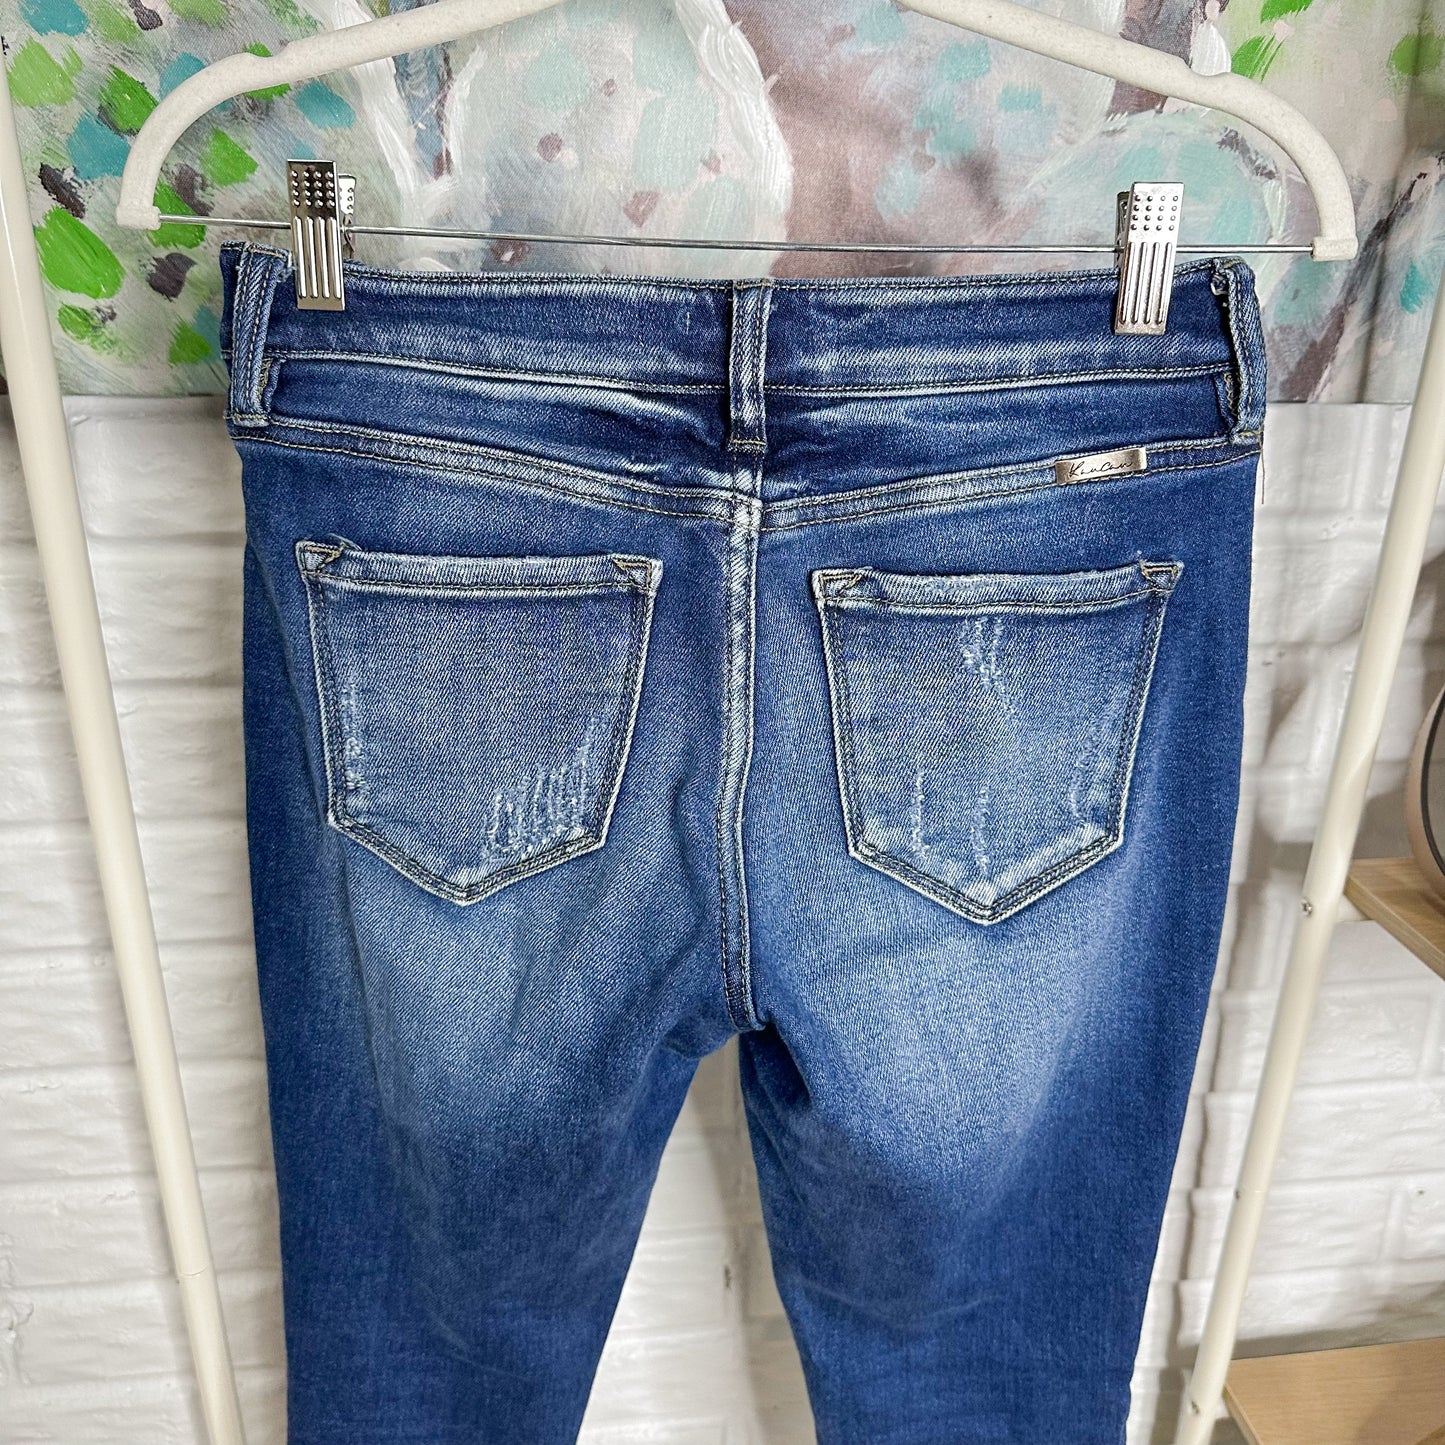 KanCan Dark Wash Skinny Jeans Size 3/25